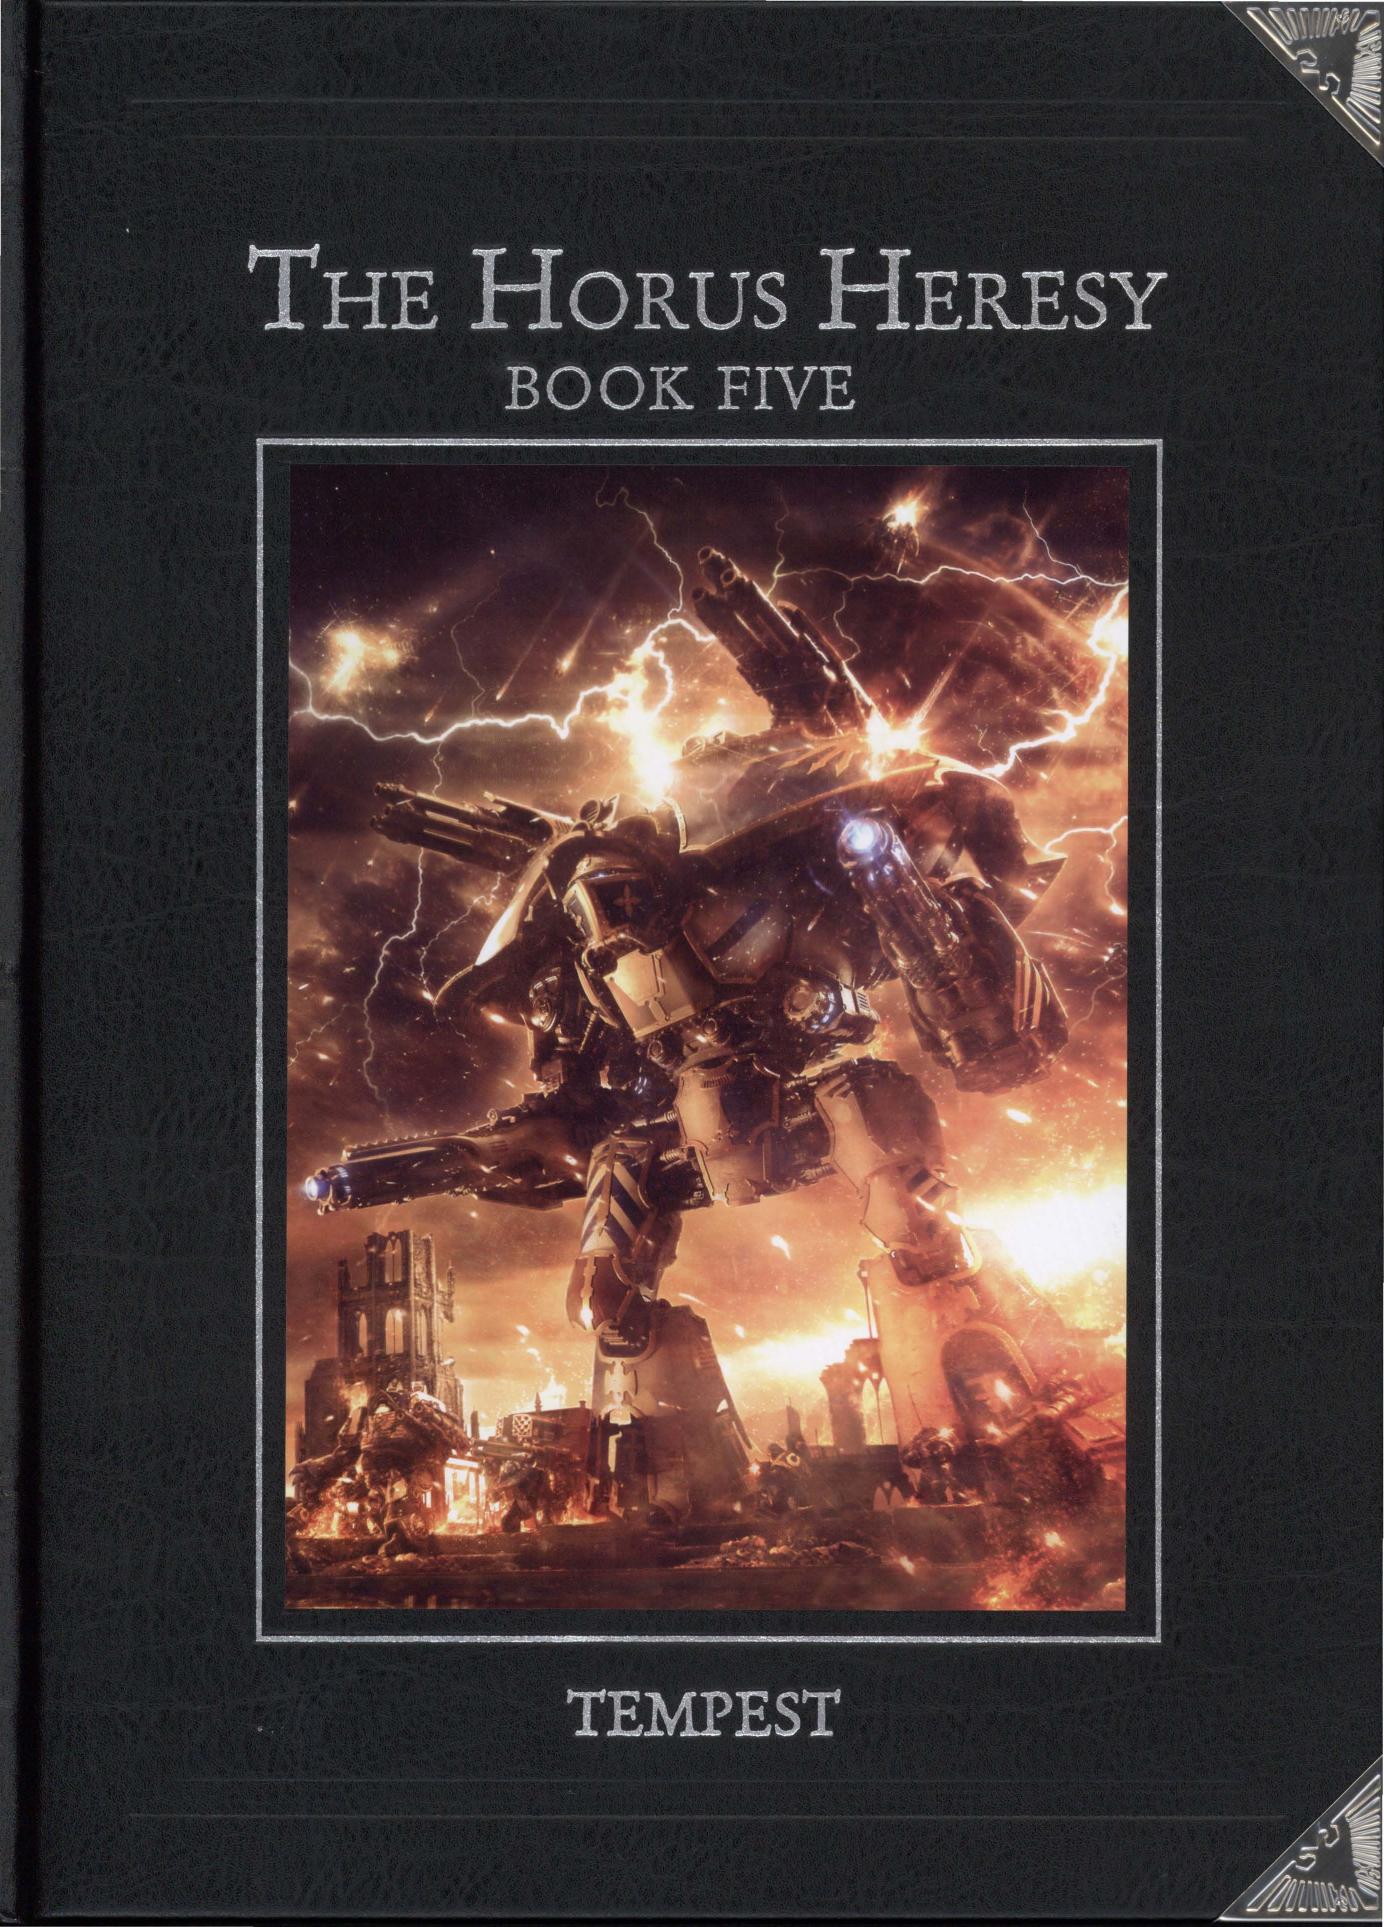 The Horus Heresy Book 5 Tempest